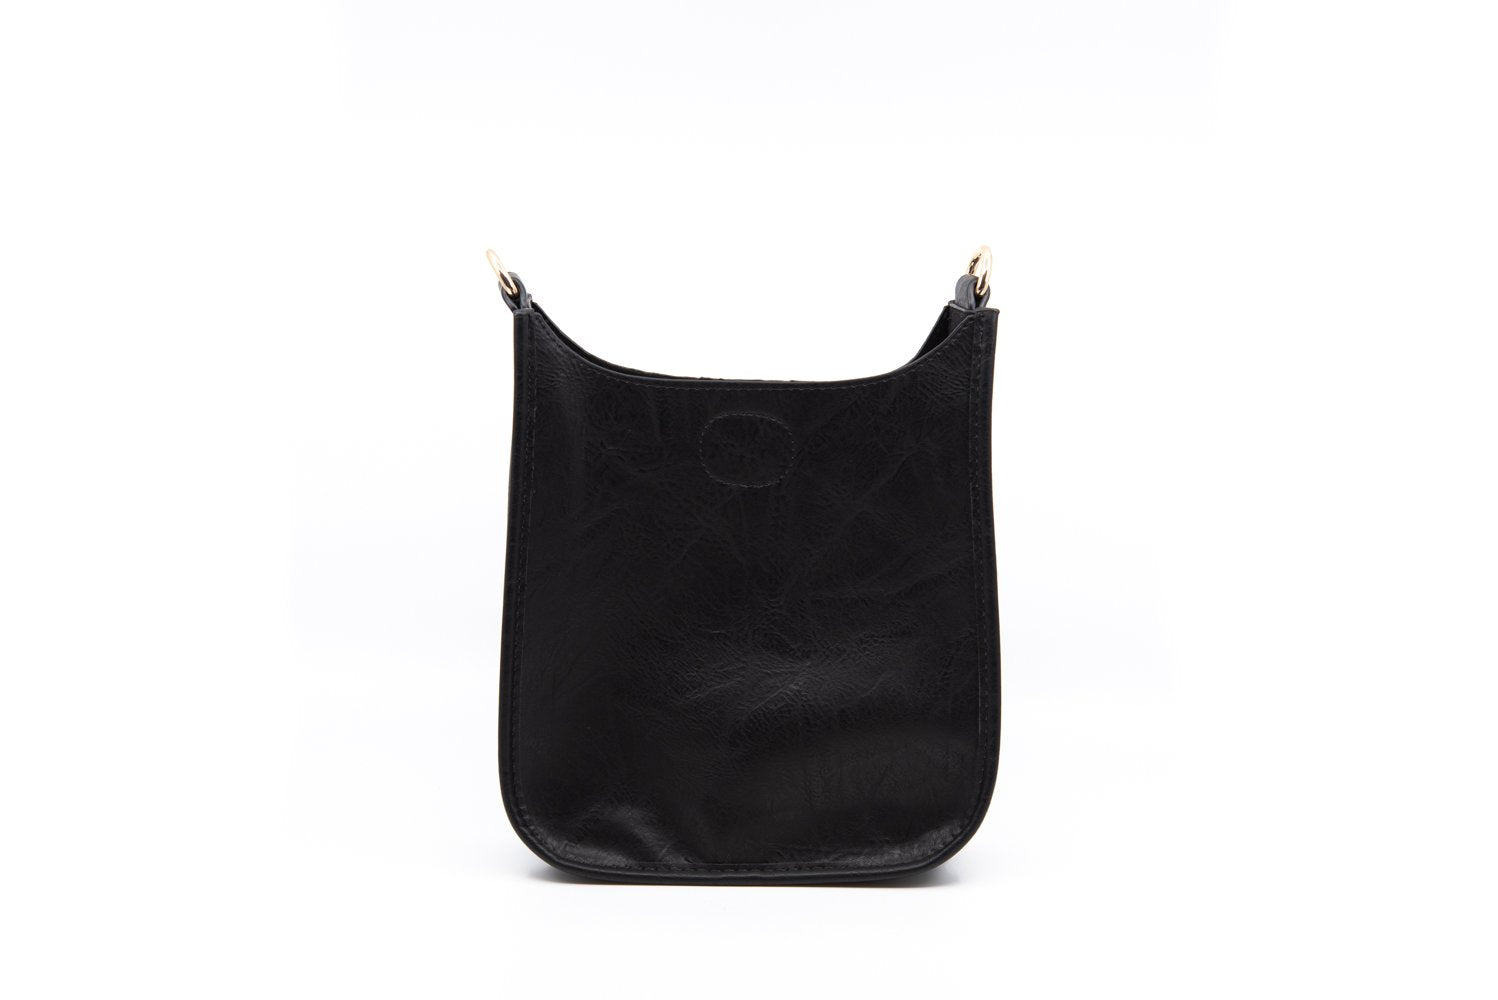 Black Handbag With Silver Hardware